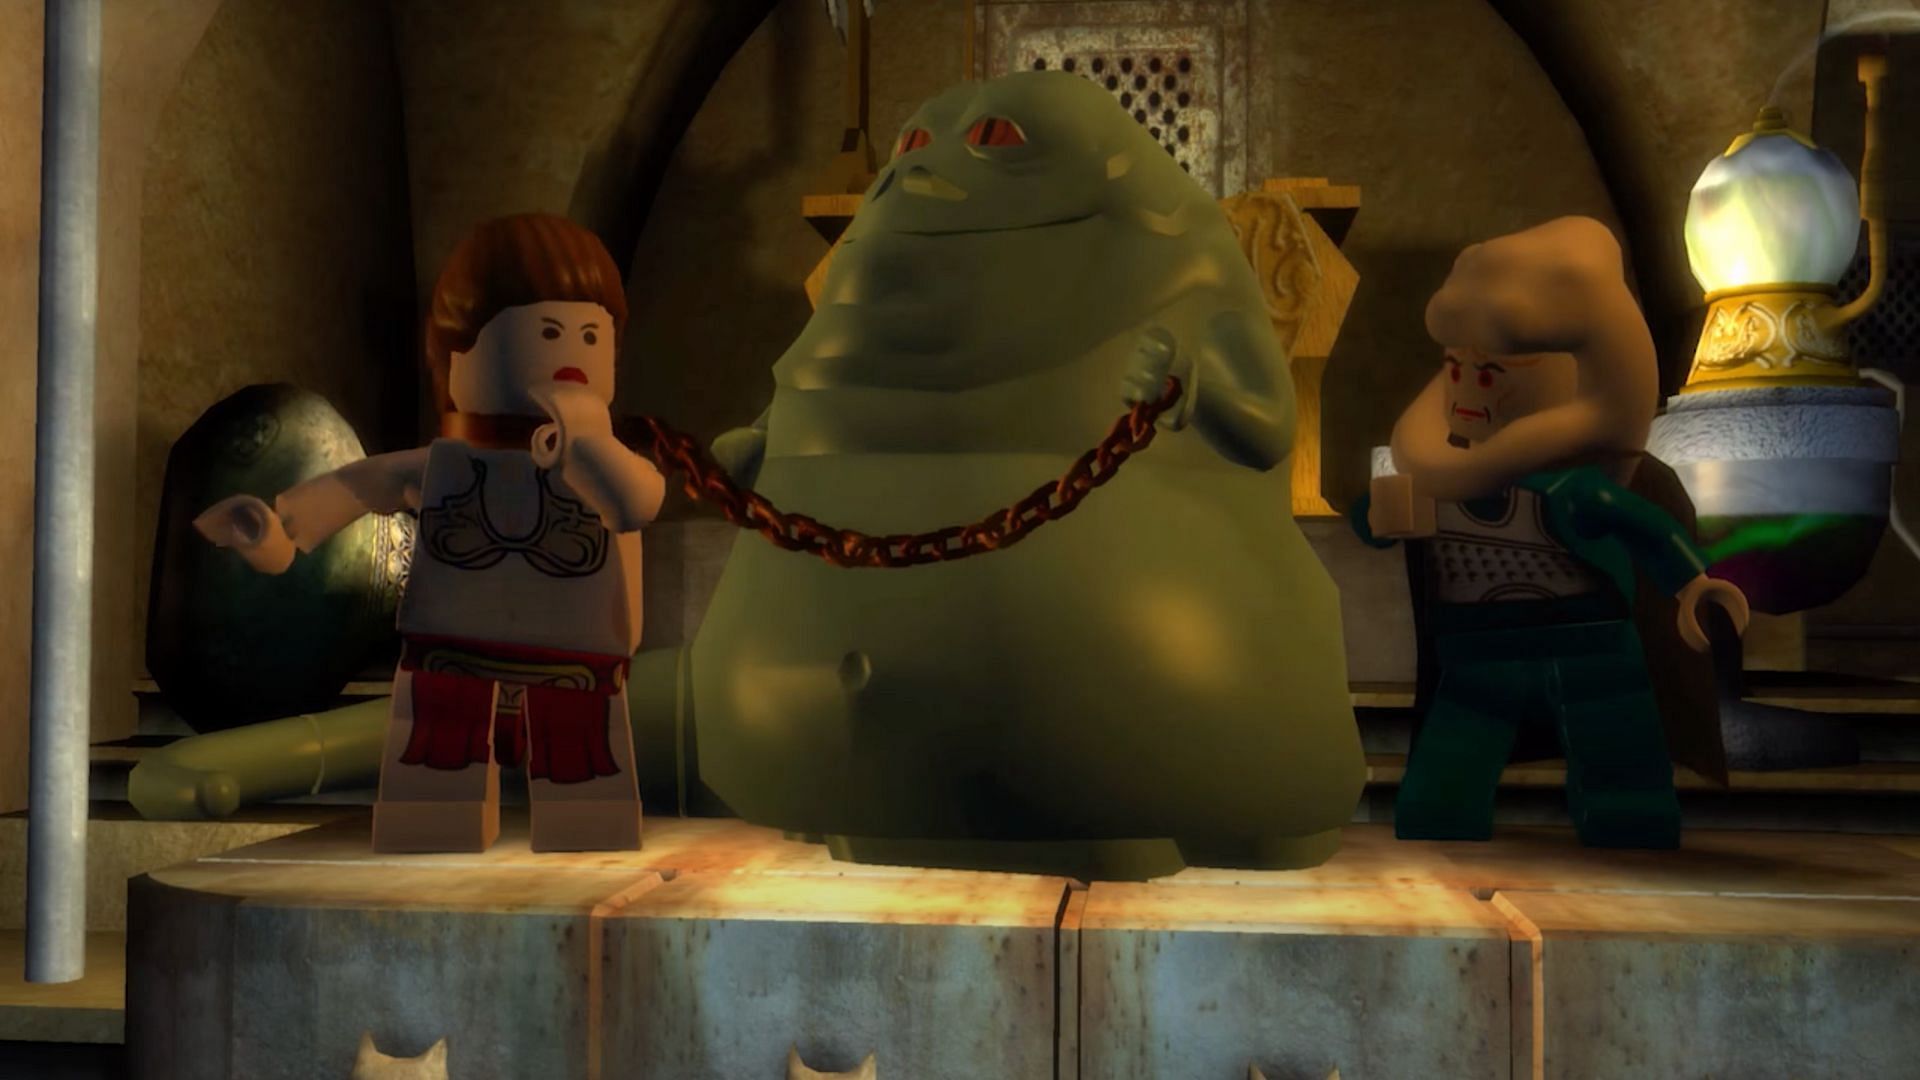 Richardson plays the role of Jabba the Hutt (Image via Generikb/YouTube)